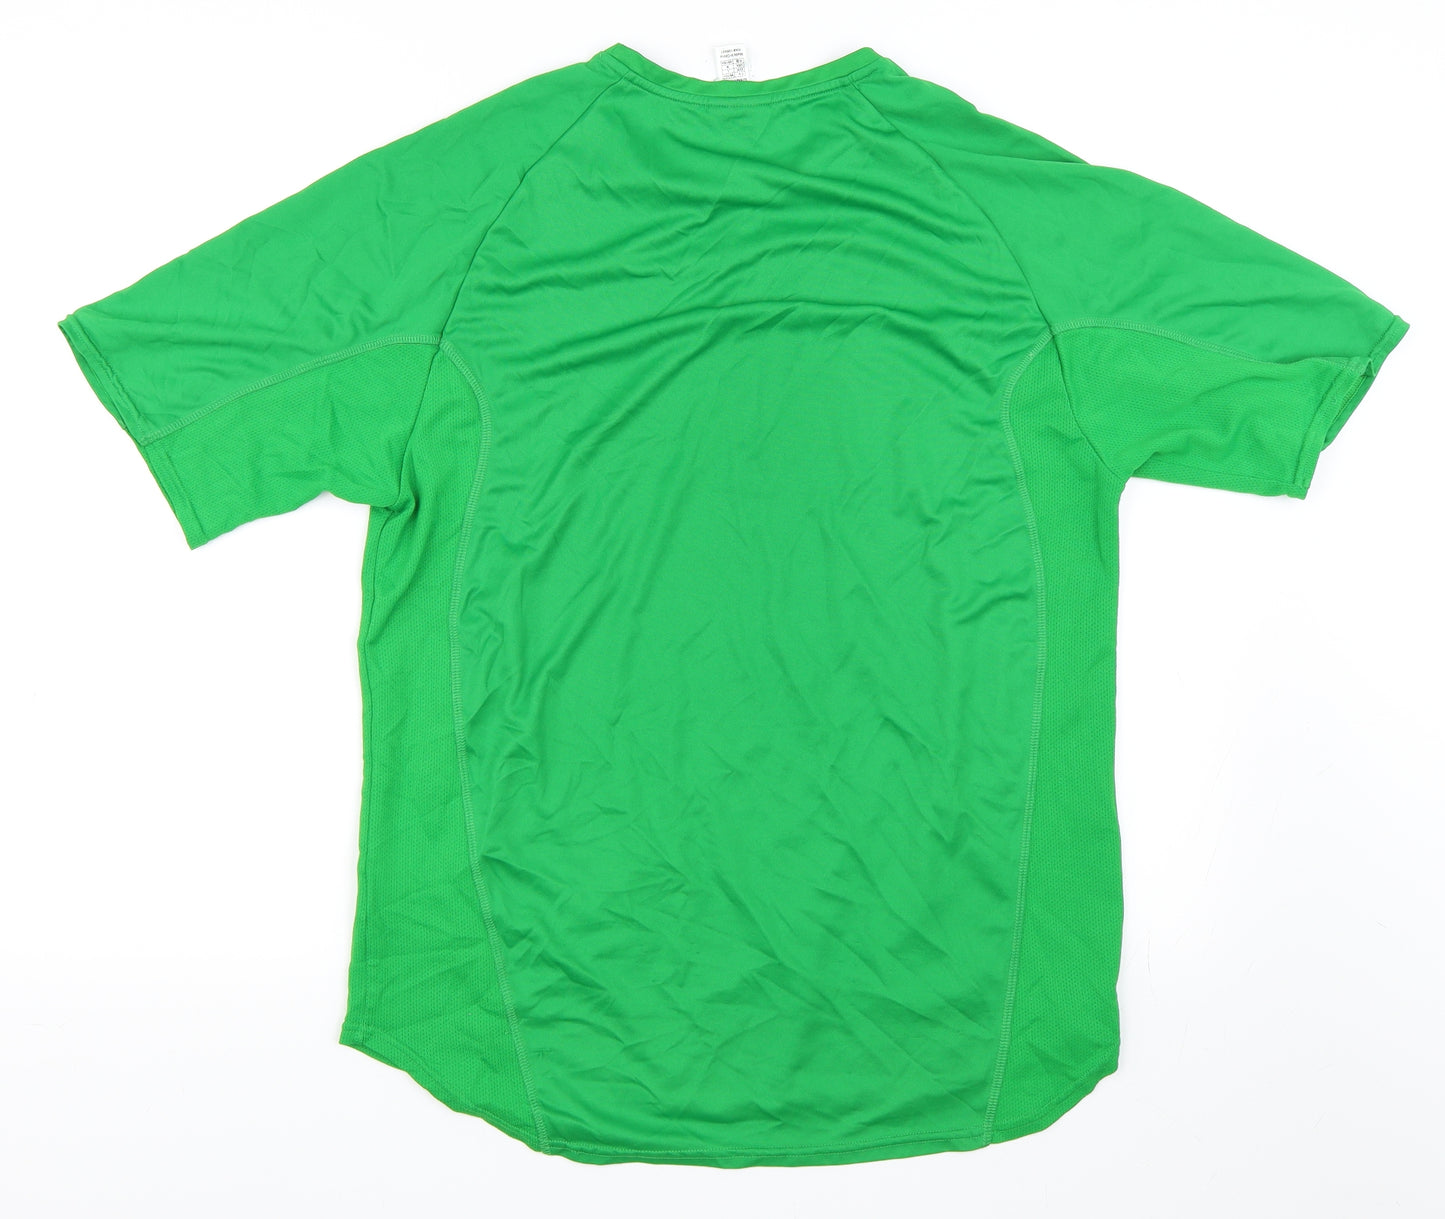 Kipsta Mens Green    T-Shirt Size L